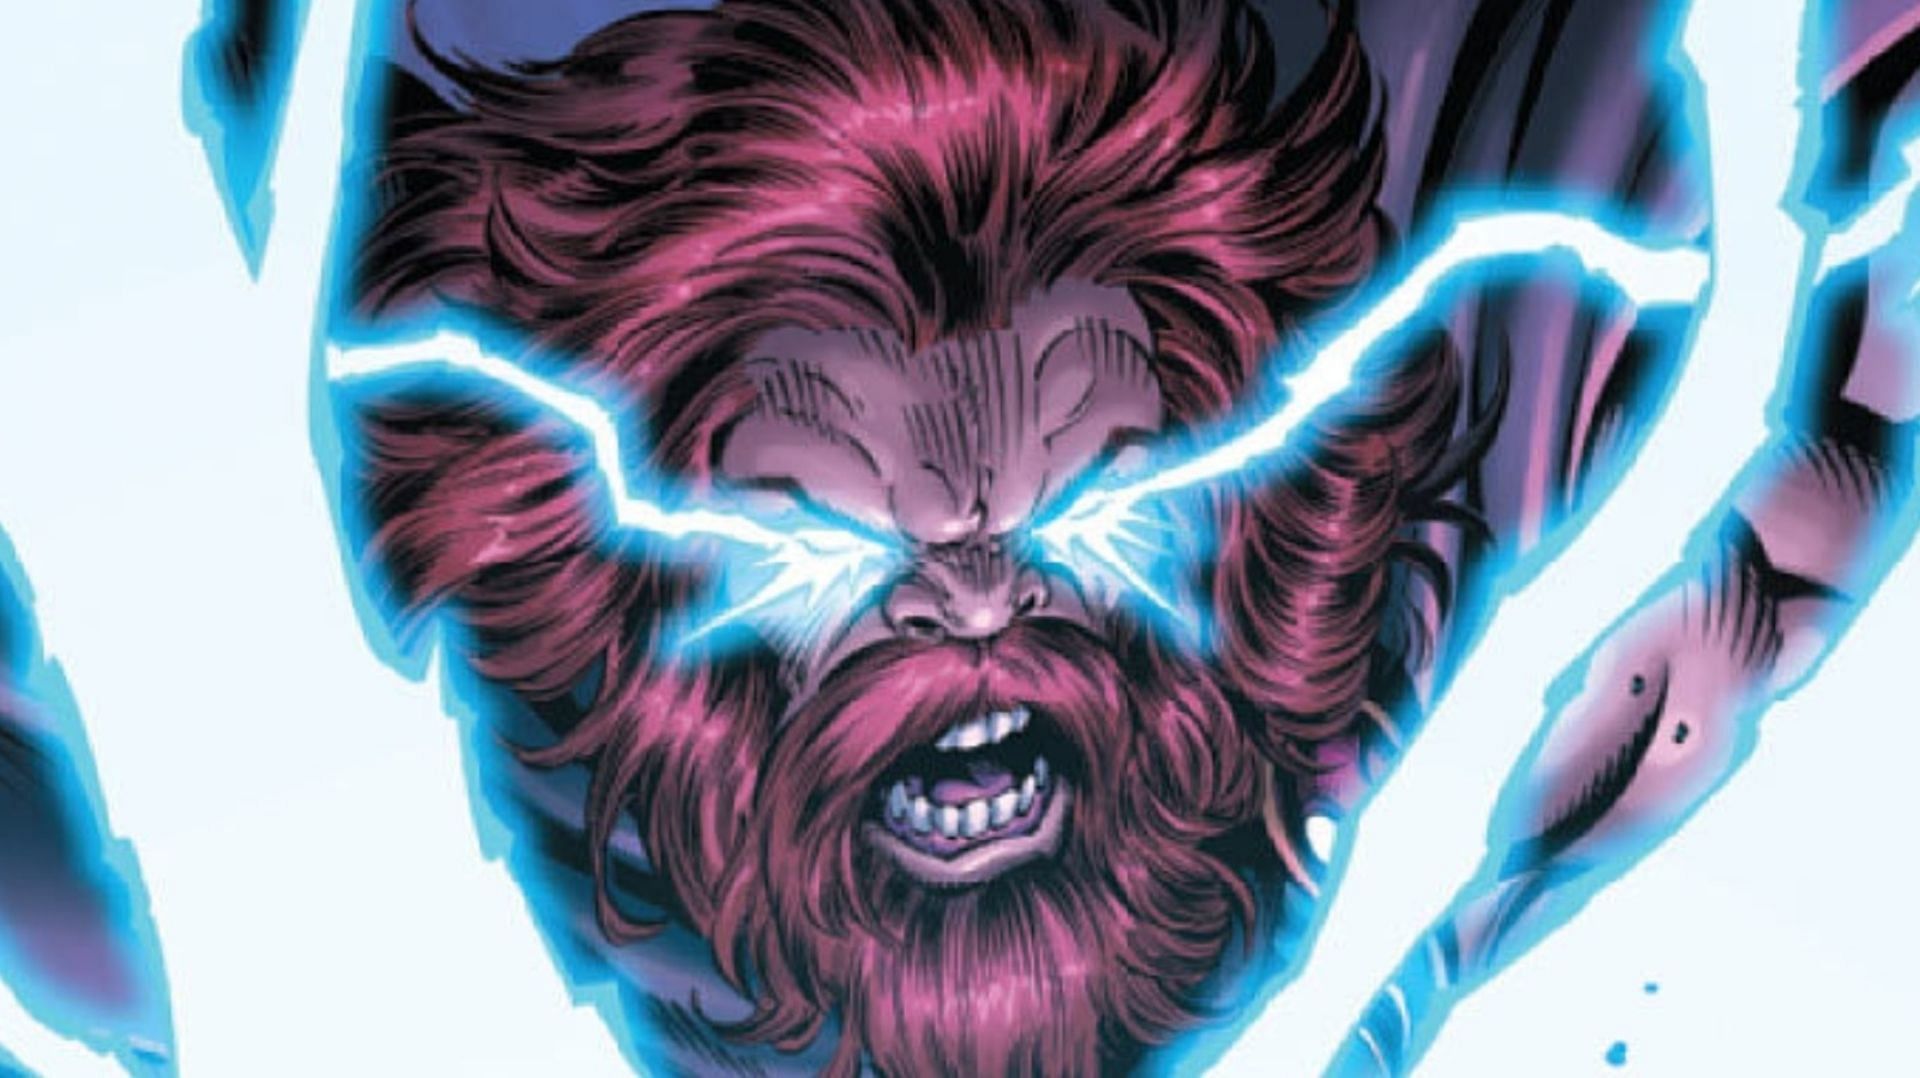 Zeus is set to enter the MCU soon (Image via Marvel)